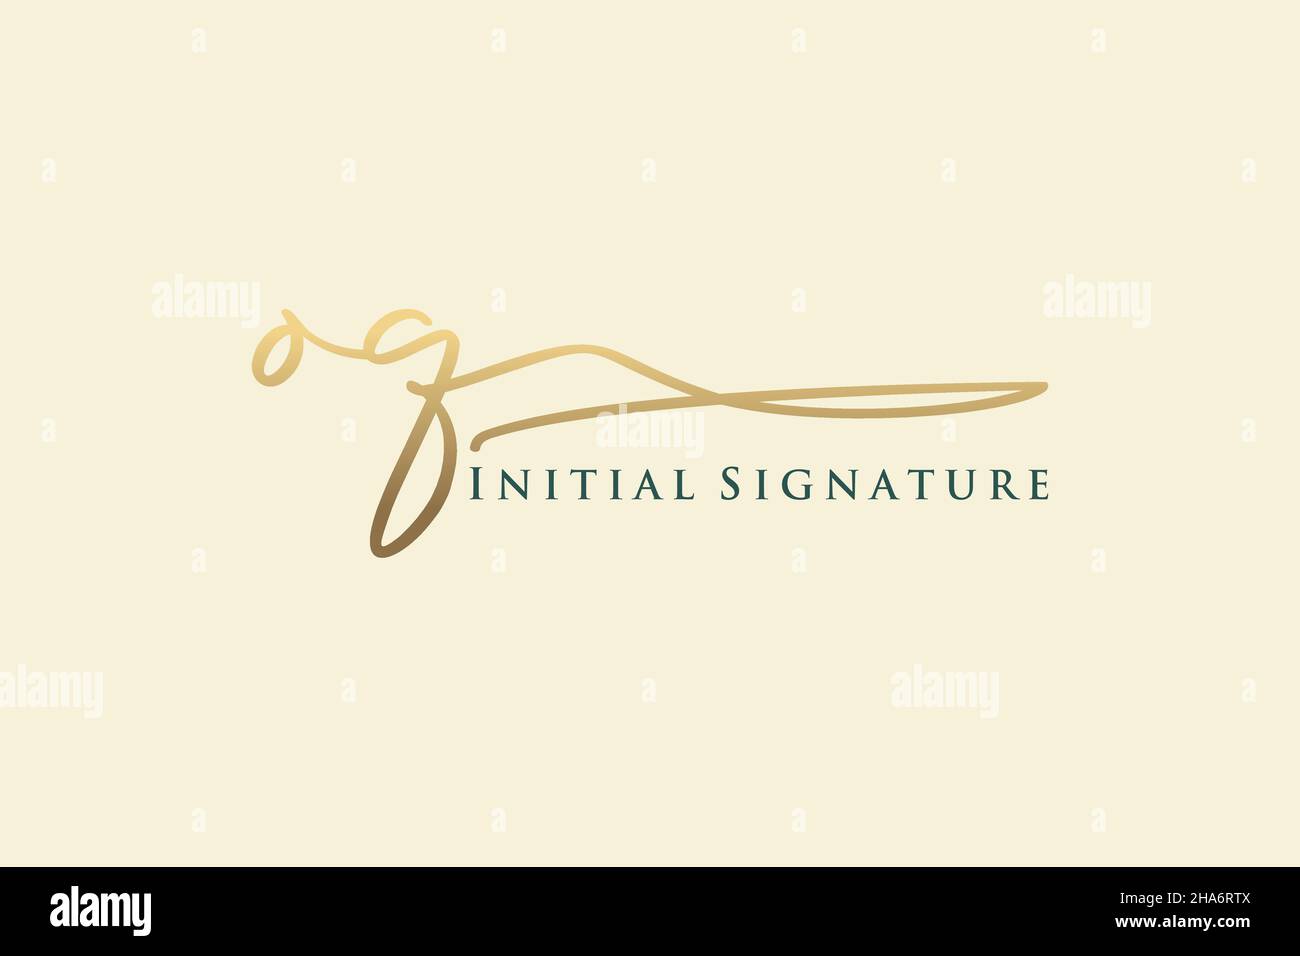 OQ Letter Signature Logo Template elegant design logo. Hand drawn Calligraphy lettering Vector illustration. Stock Vector